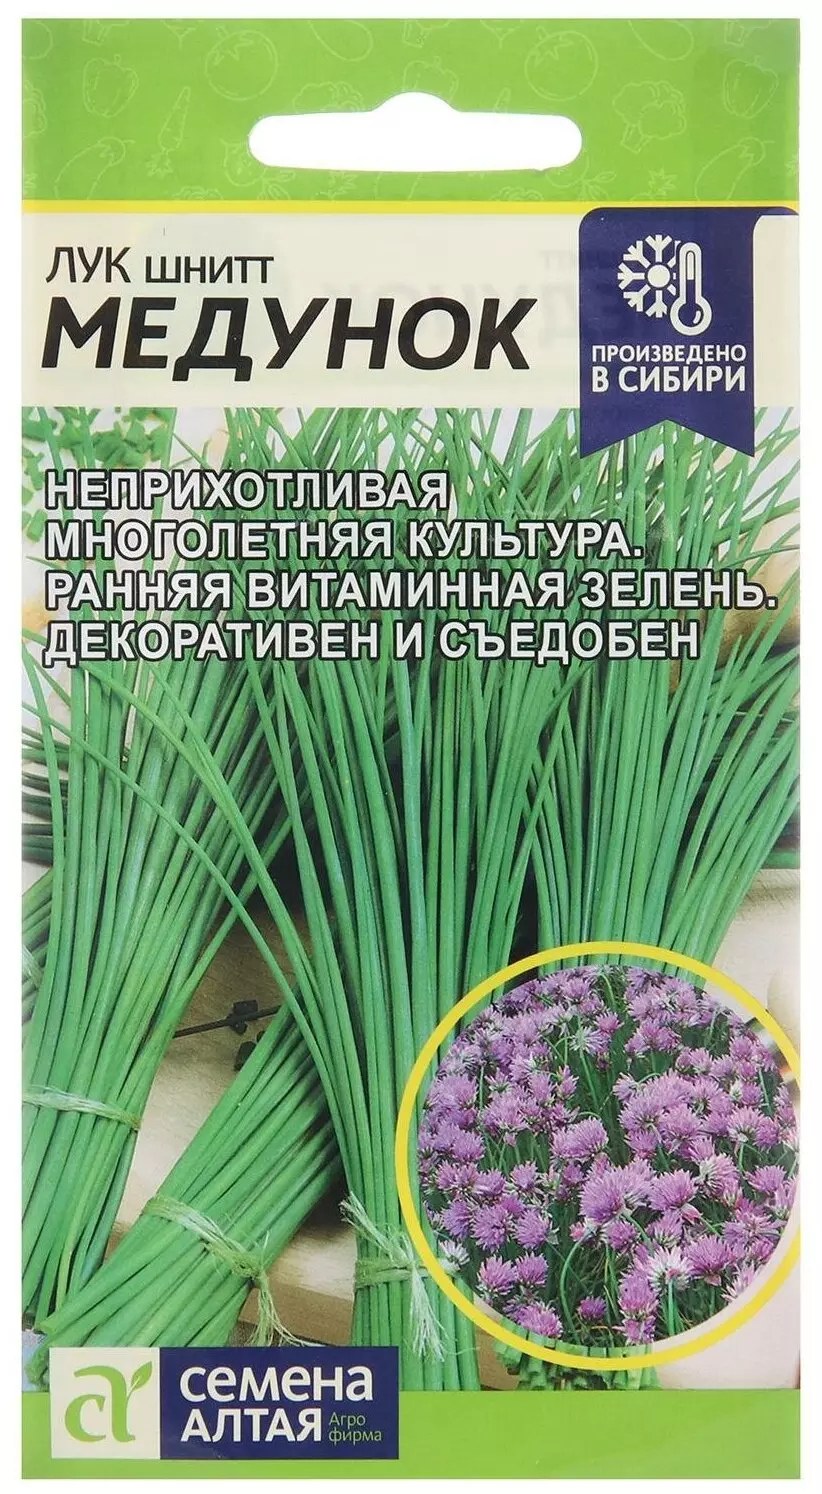 Семена Лук Шнитт Медунок/Сем Алт/цп 0,5 гр.